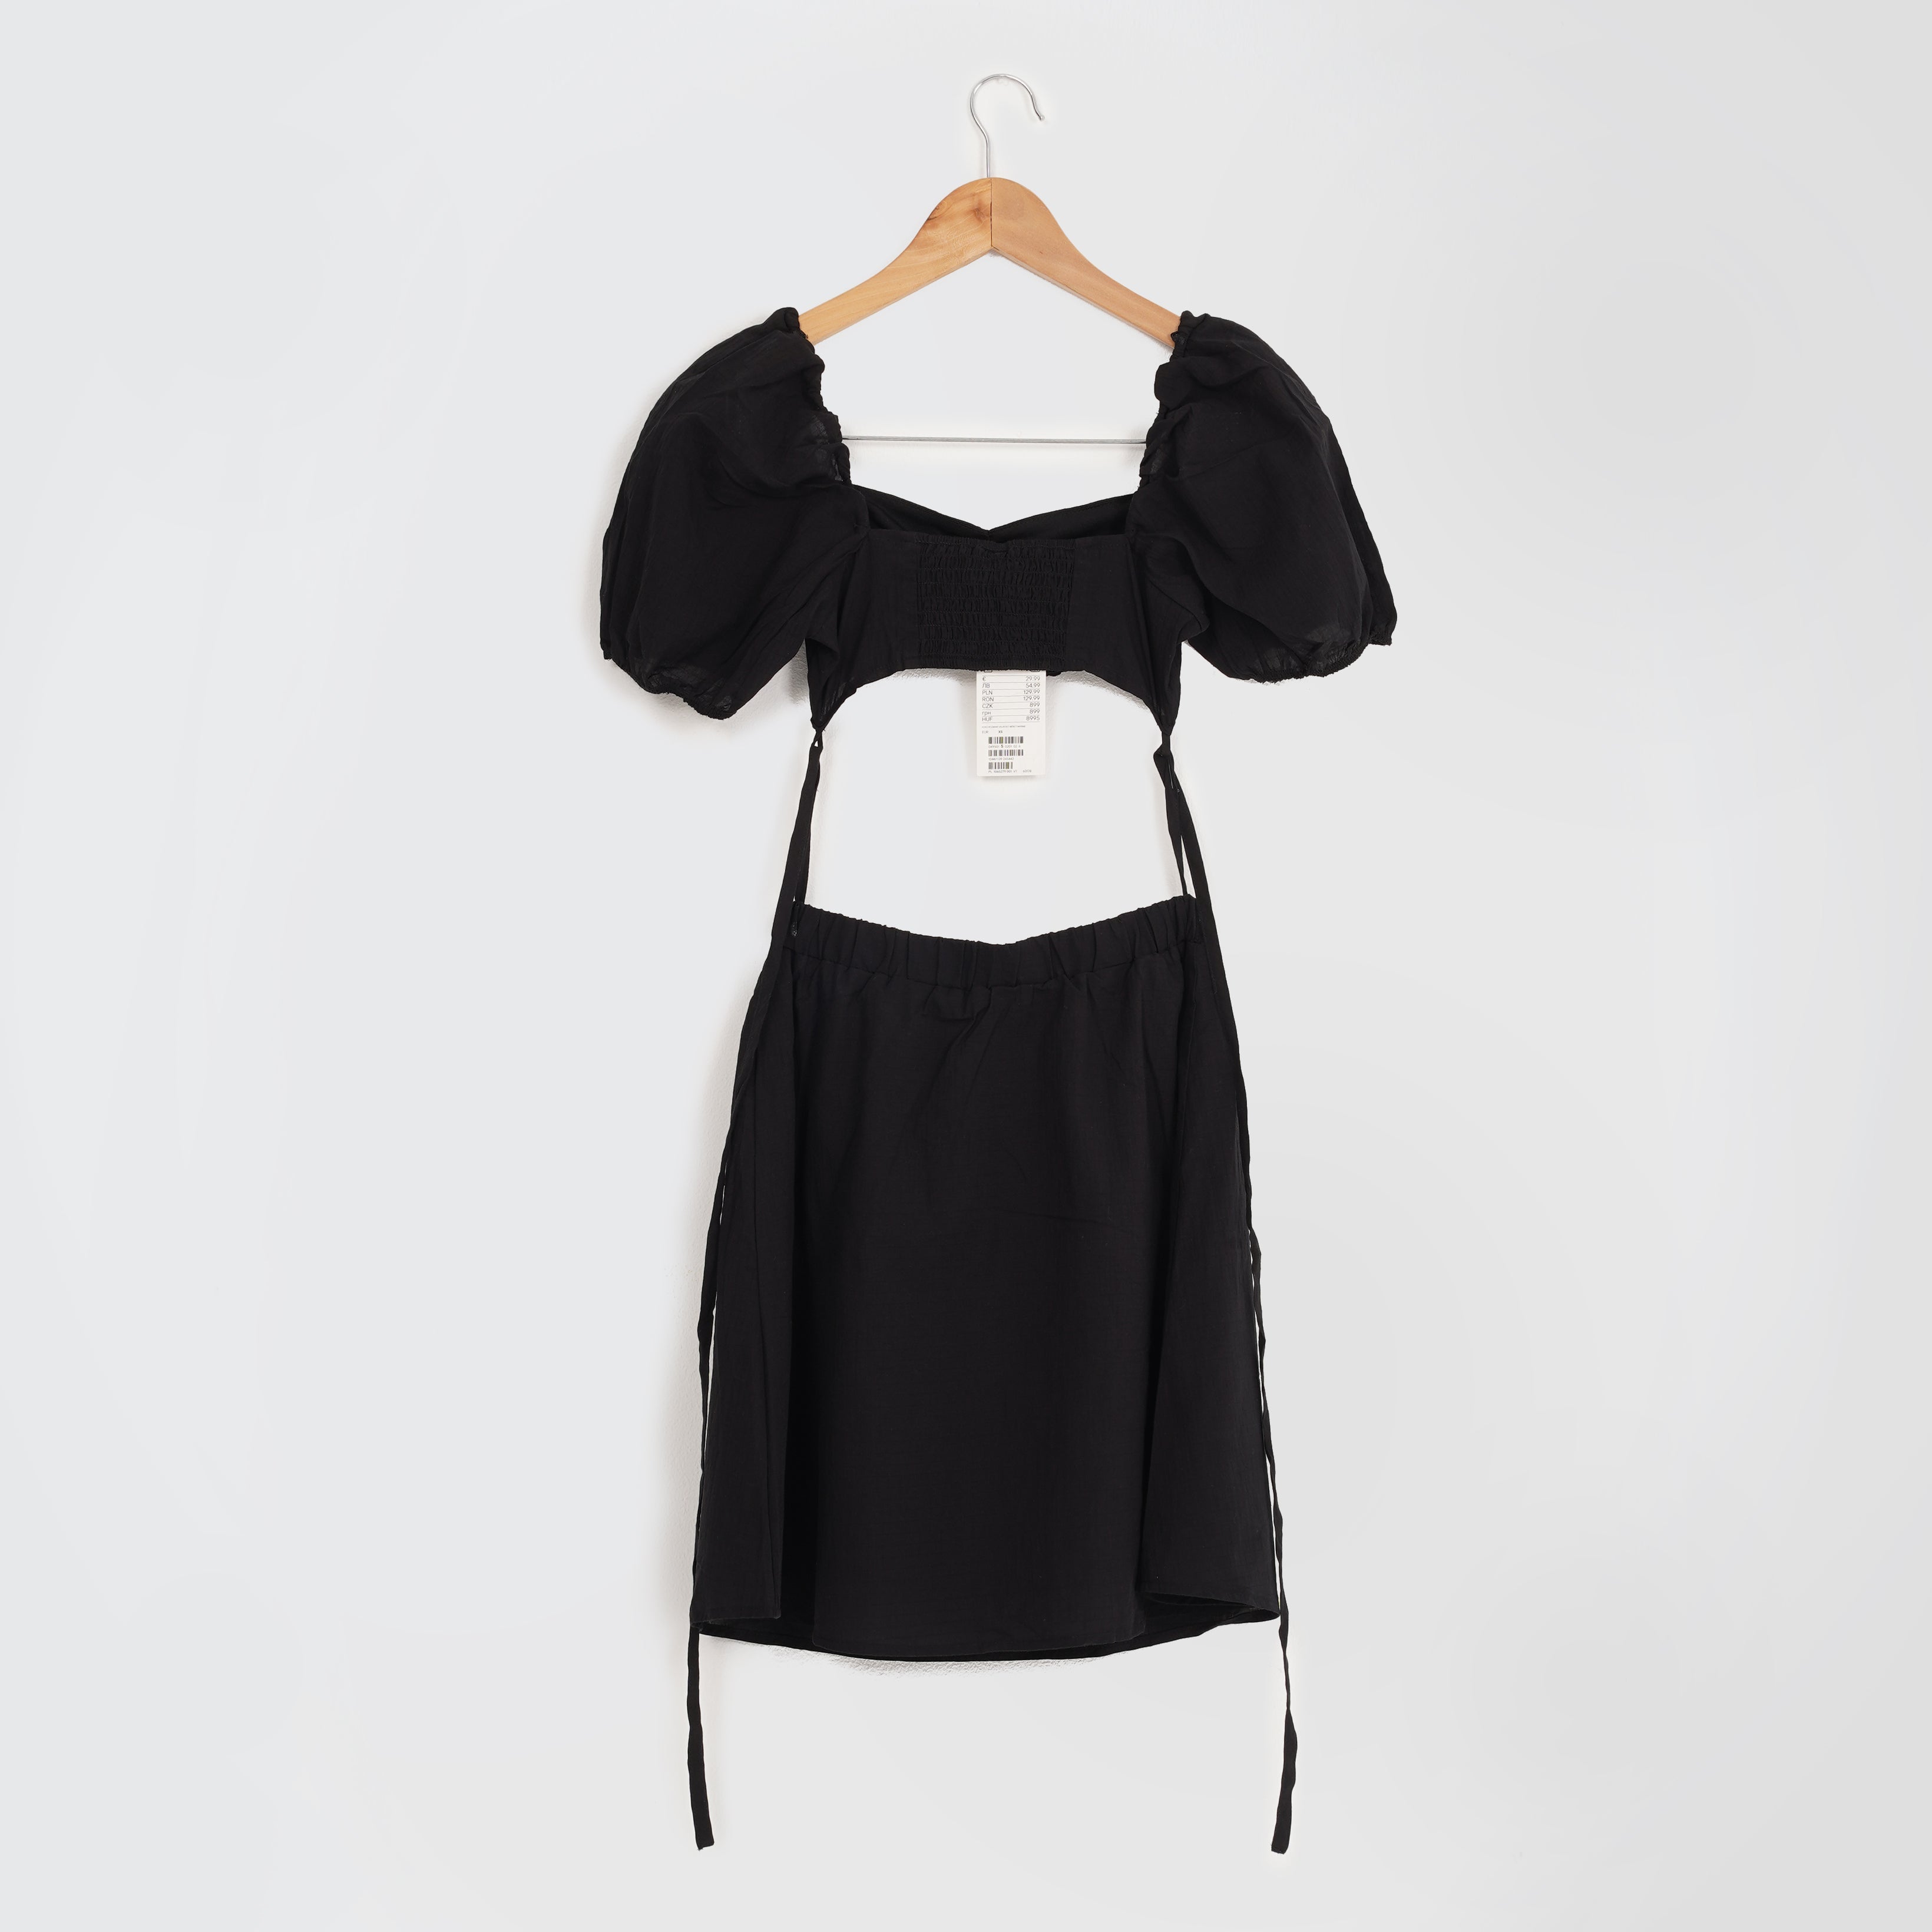 Original H&M Crop Top and Skirt Set - Marca Deals - H&M